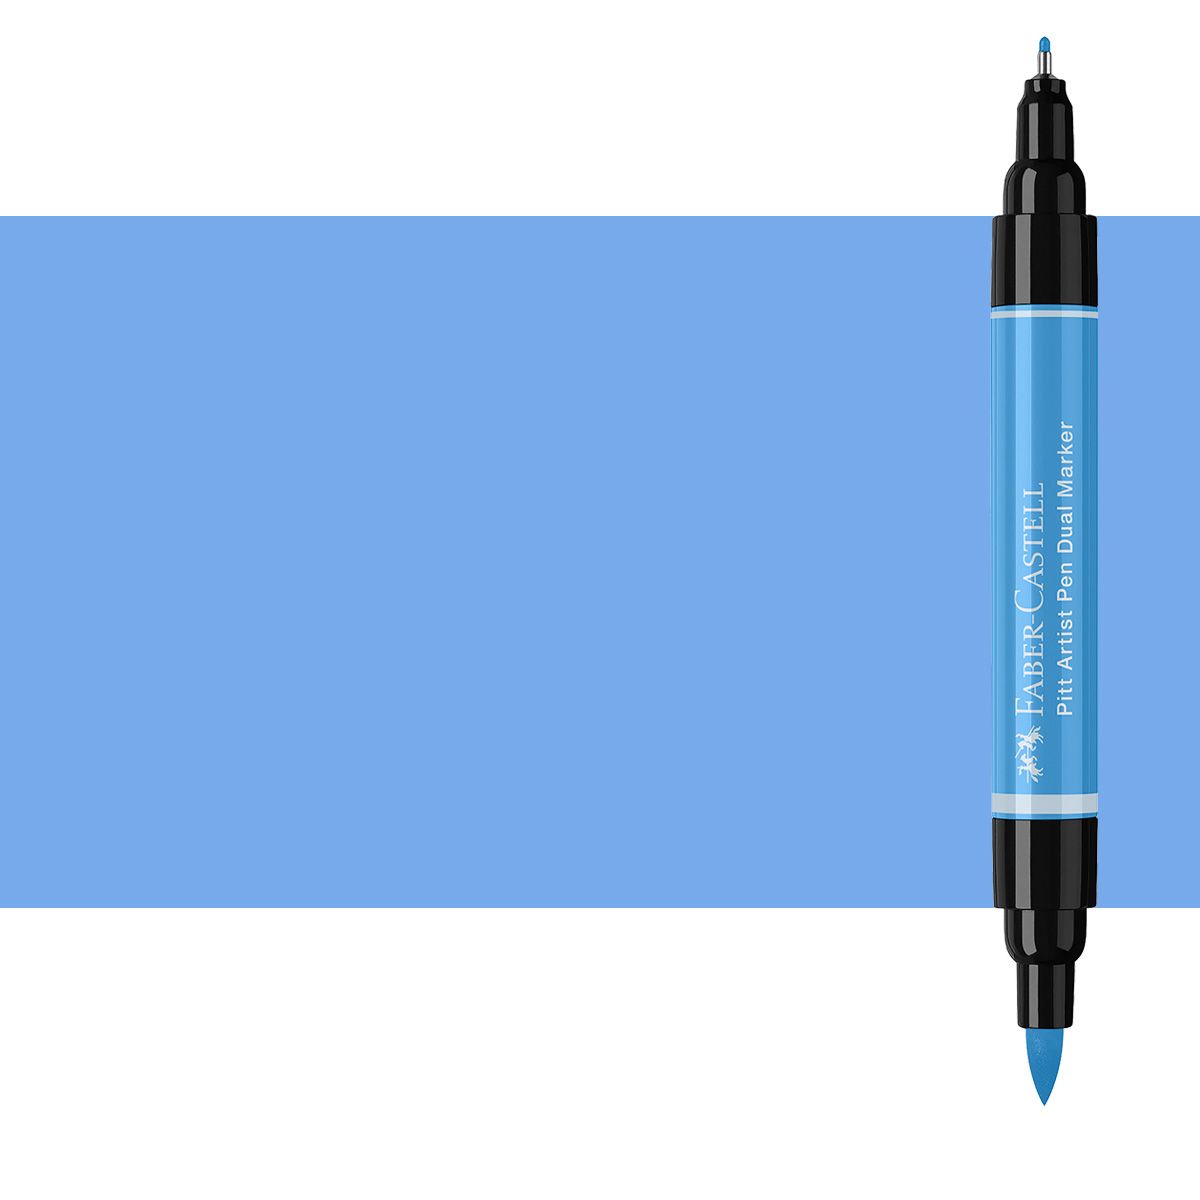 Pen+Gear Felt-Tip Pens, Ultra Fine, 24 Count - Grading, Drawing, Crafts